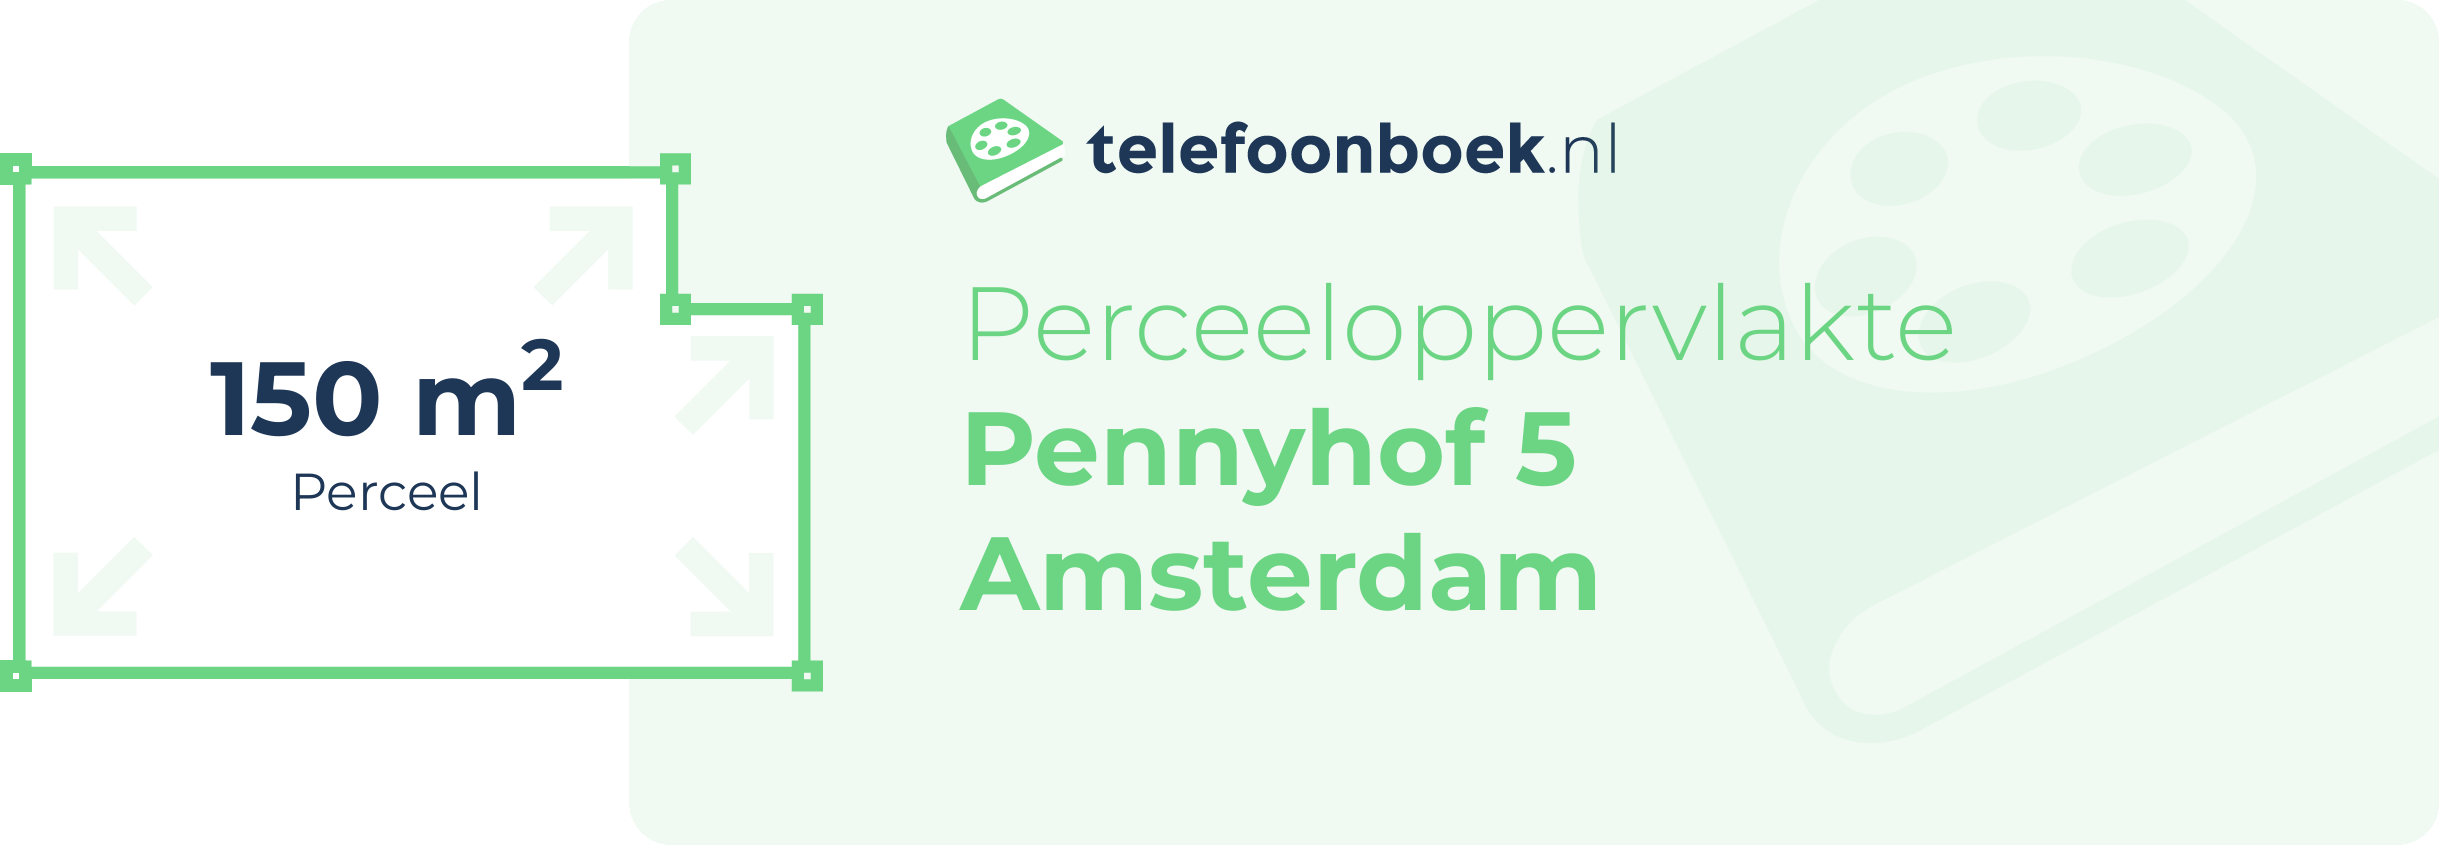 Perceeloppervlakte Pennyhof 5 Amsterdam